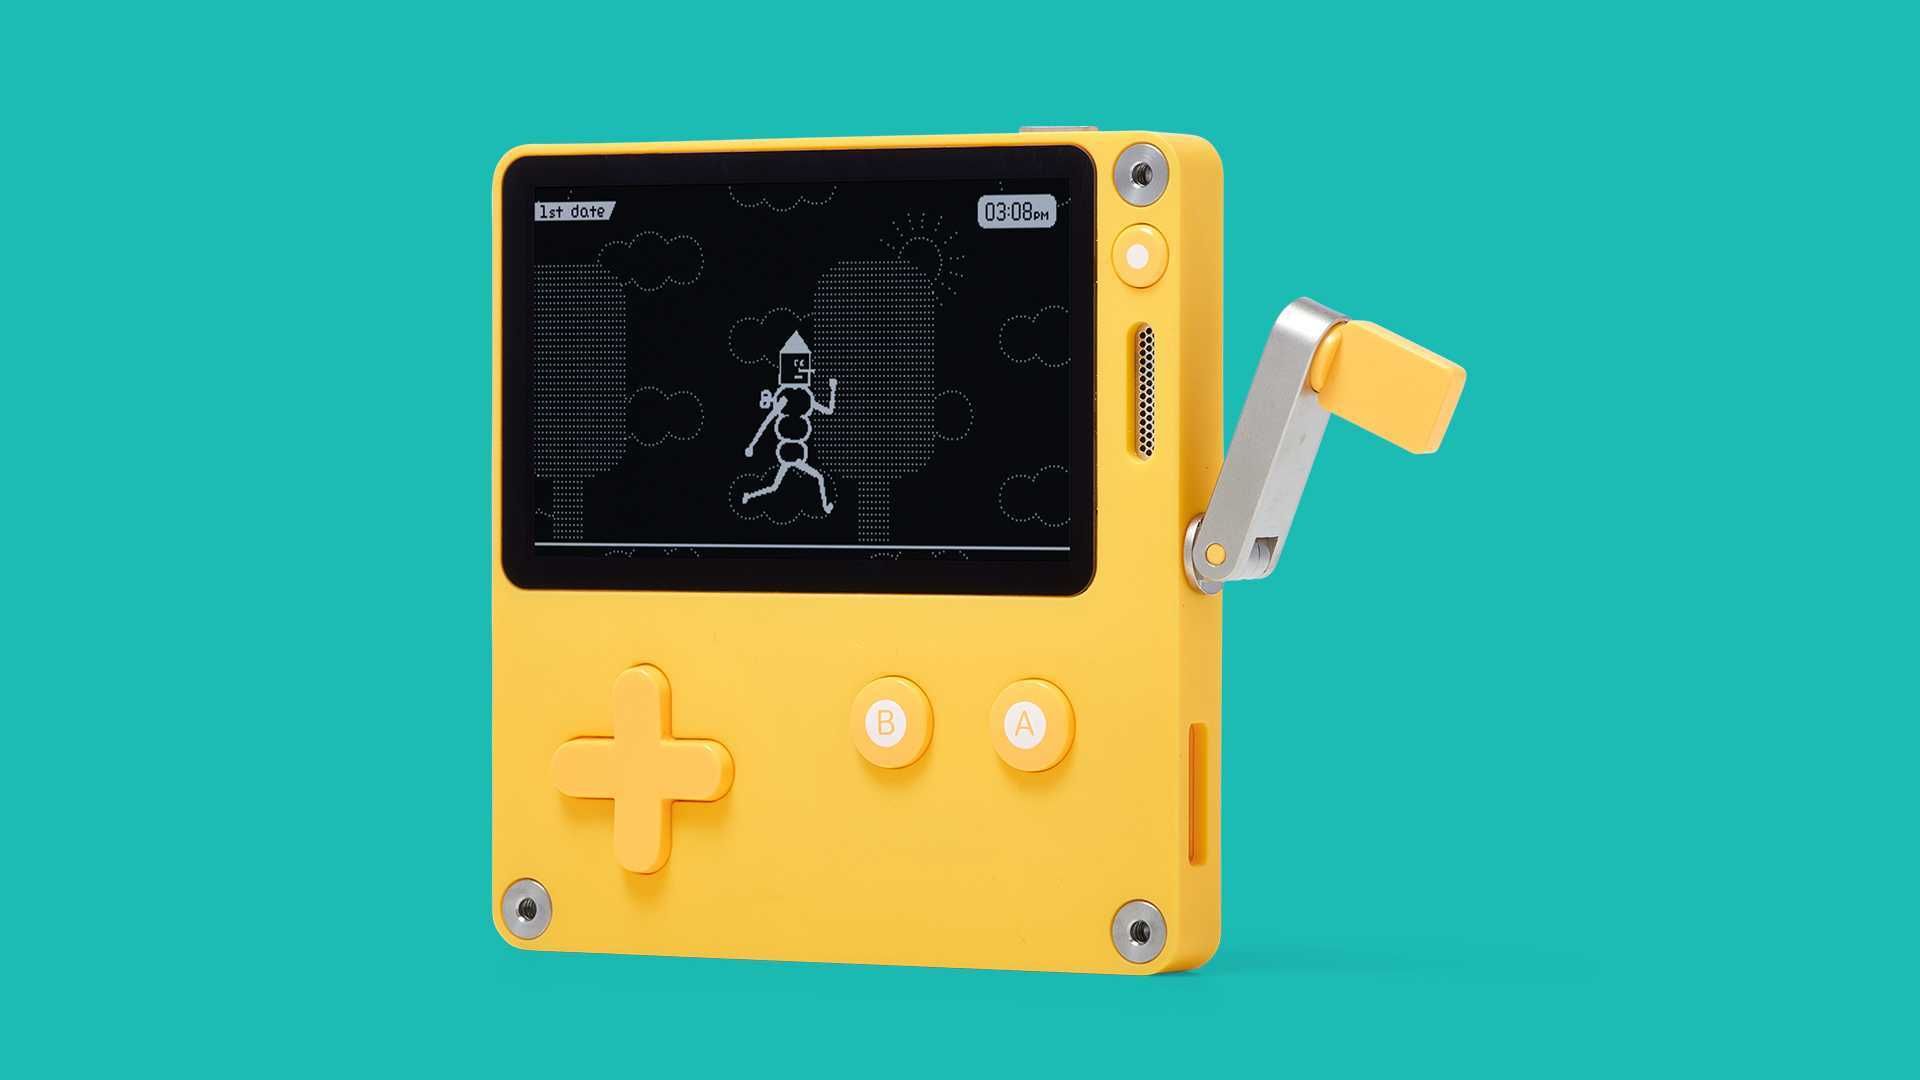 Image of Panic's yellow Playdate handheld video game console